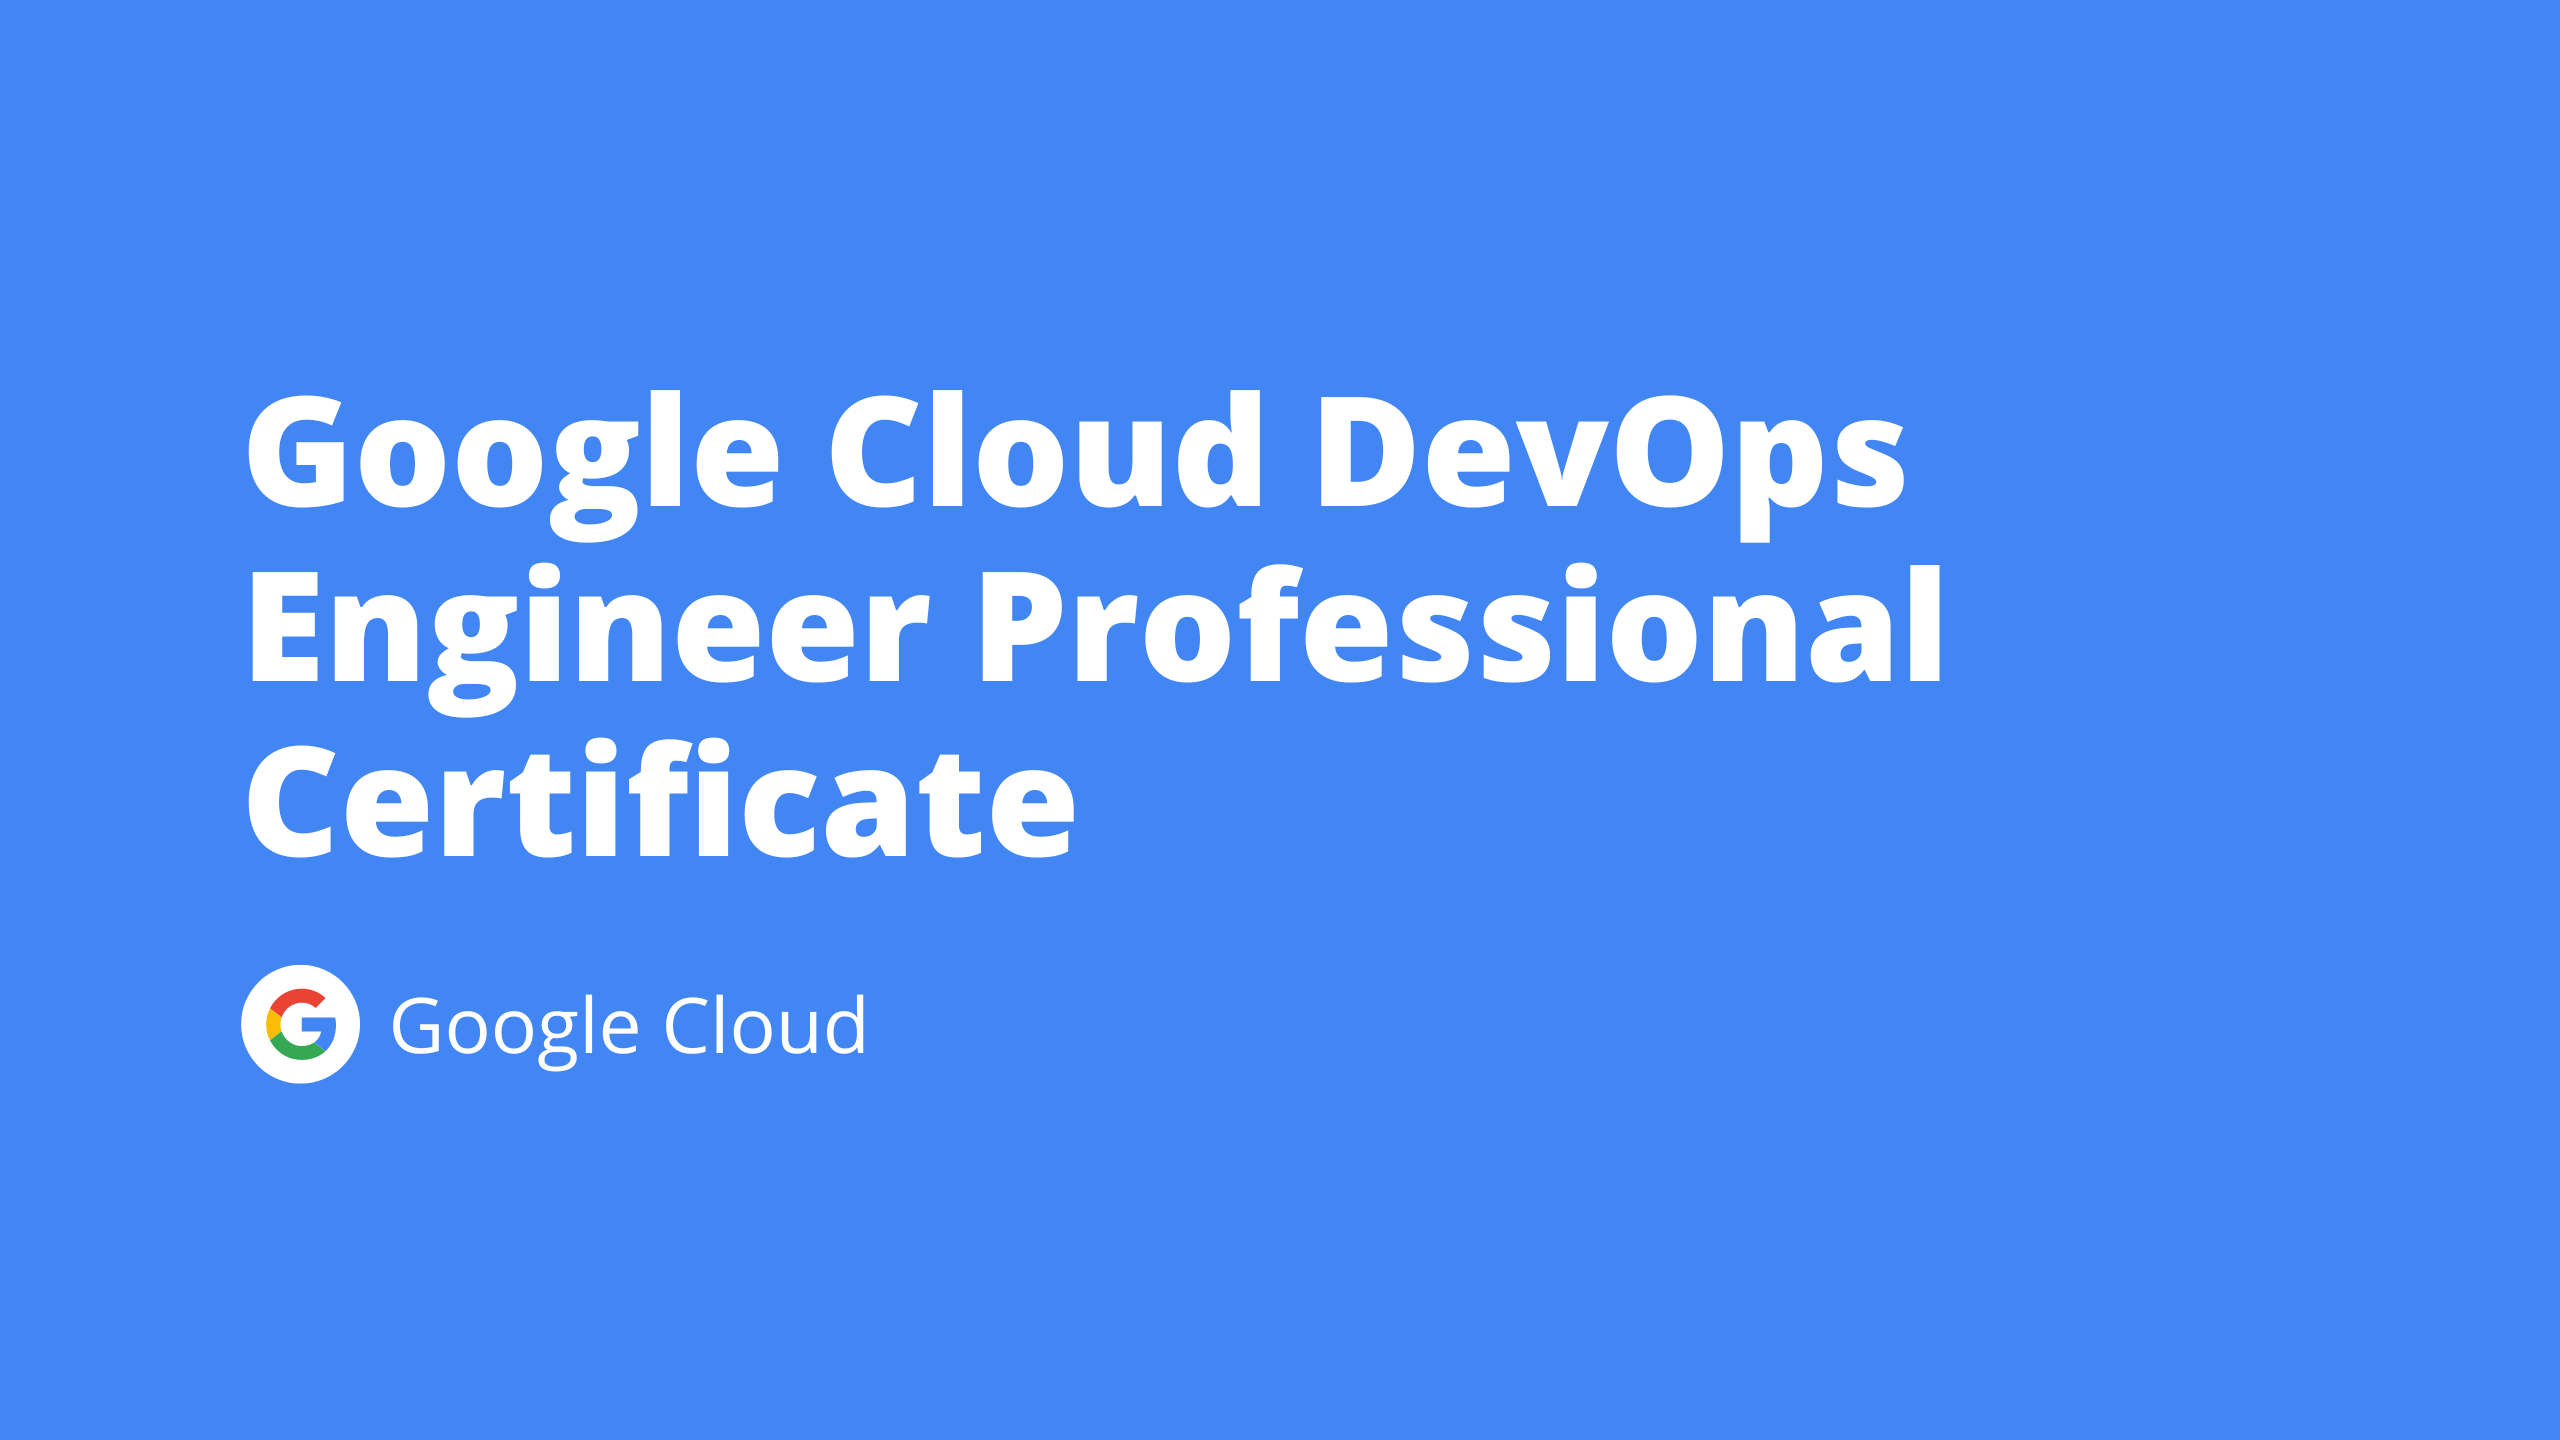 Google Cloud DevOps Engineer Professional Certificate